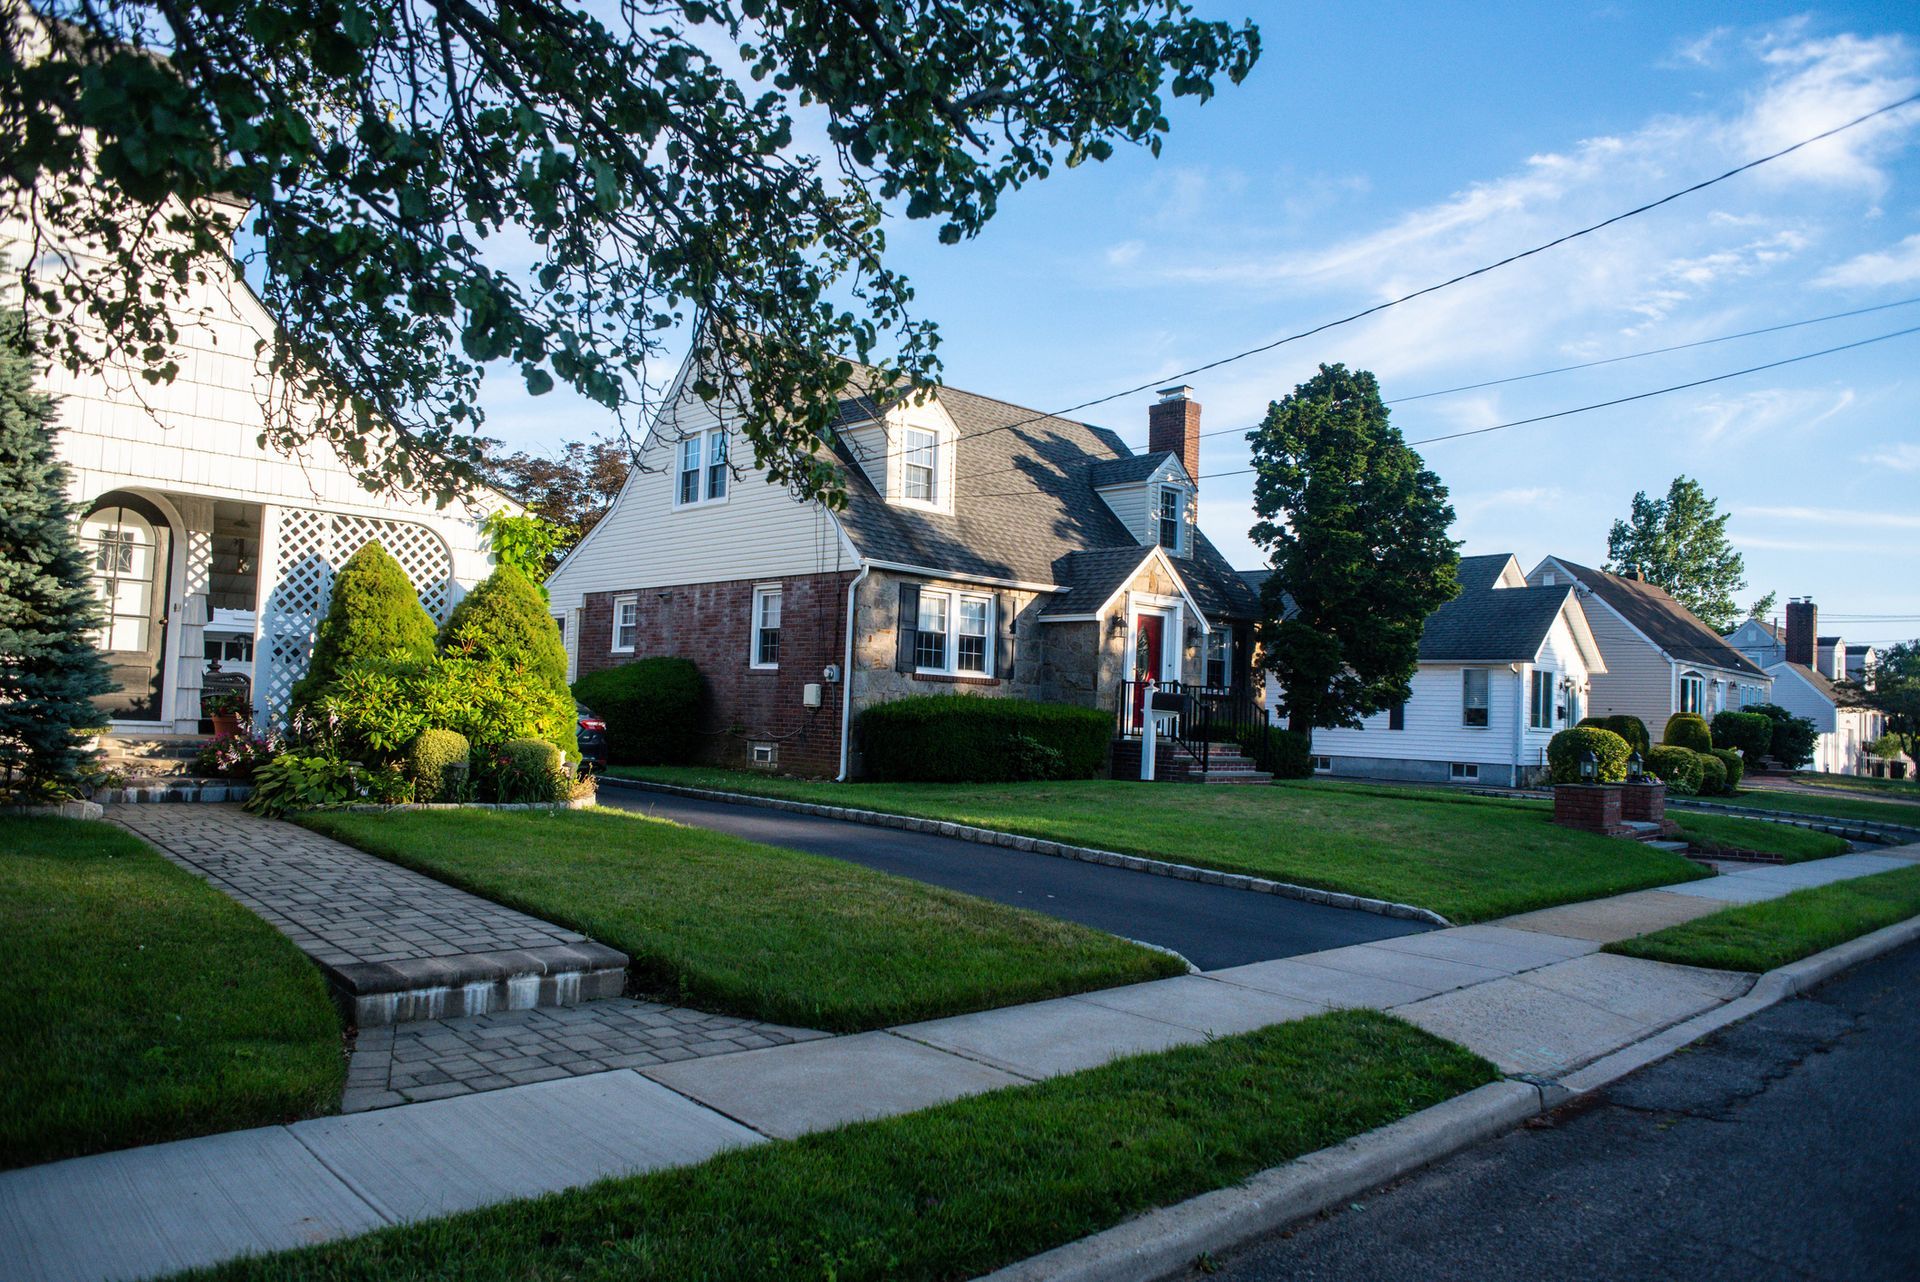 Home in a suburban neighborhood – Dayton, OH - C & G Mortgage